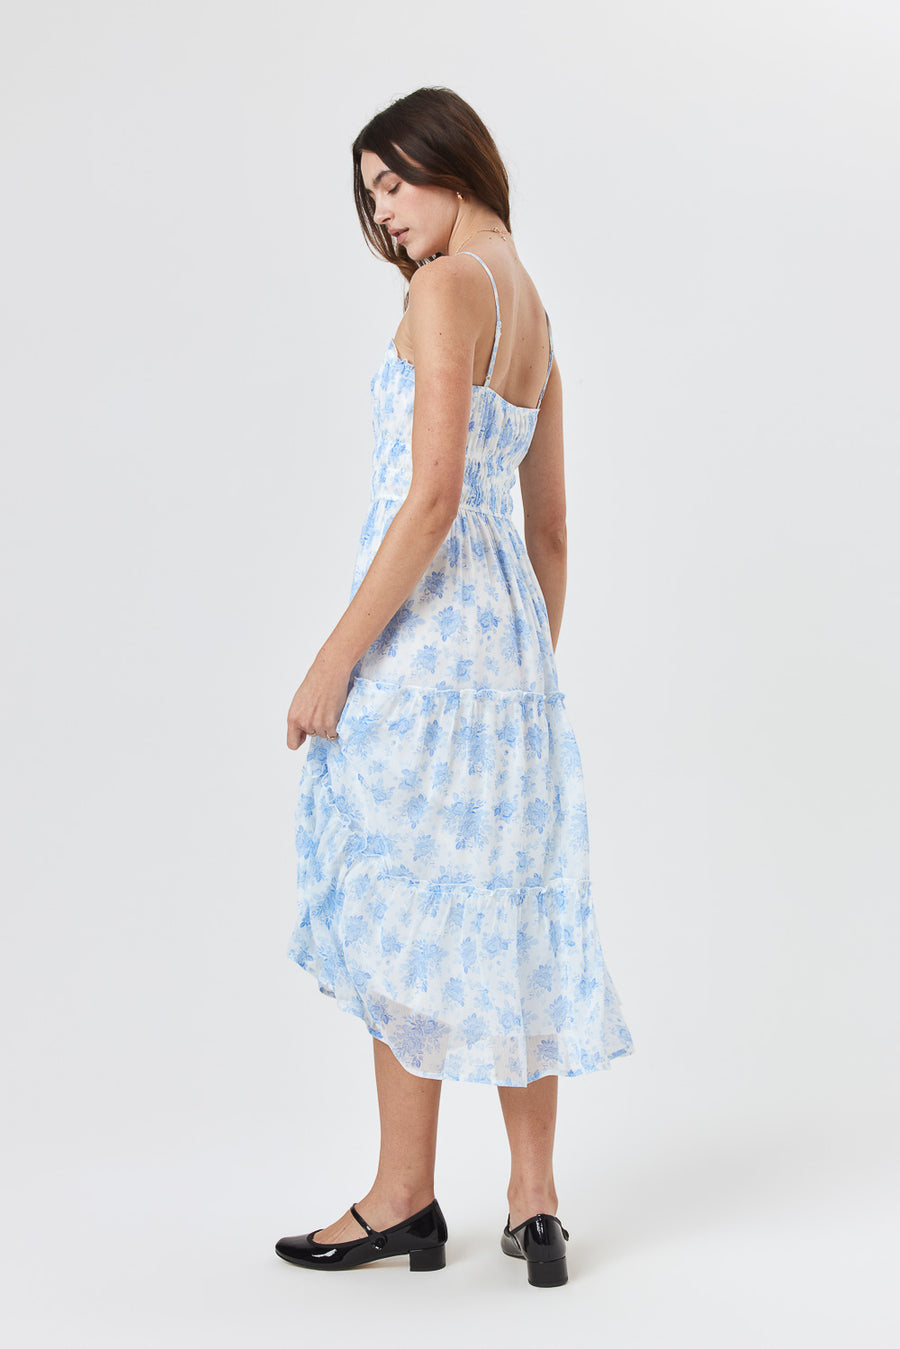 White Blue Floral Emma Tier Midi Dress - Trixxi Clothing